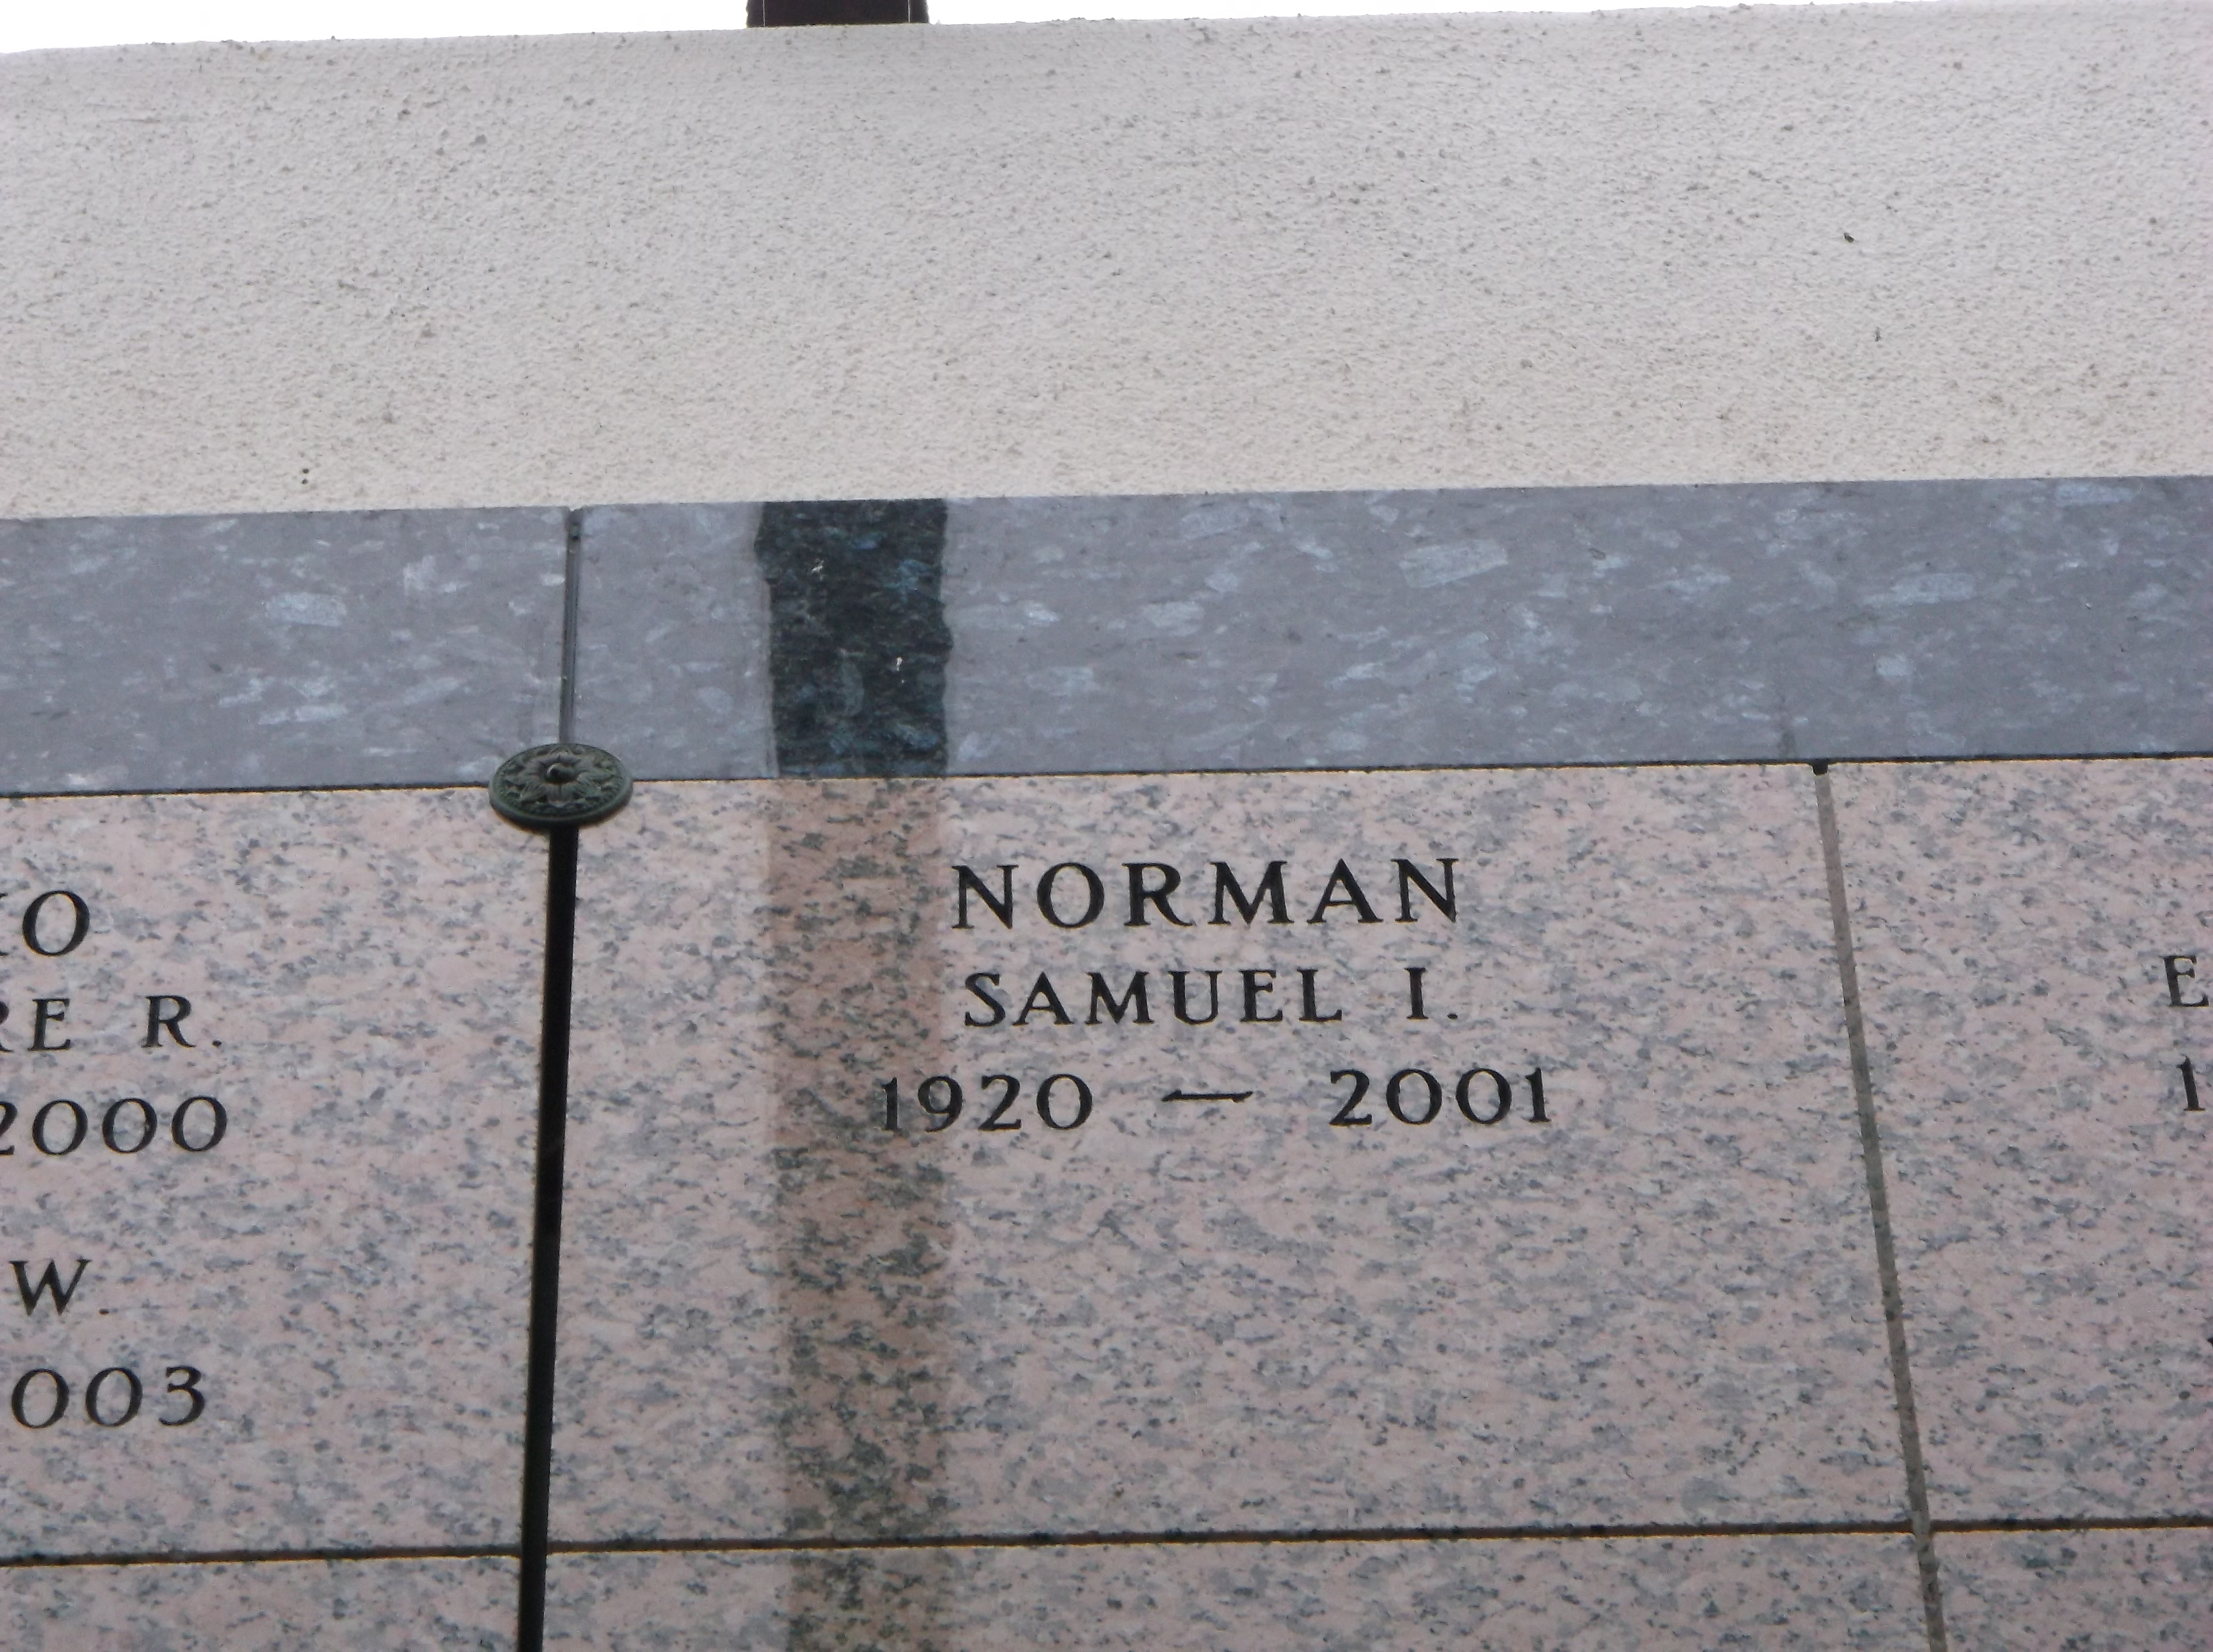 Samuel I Norman